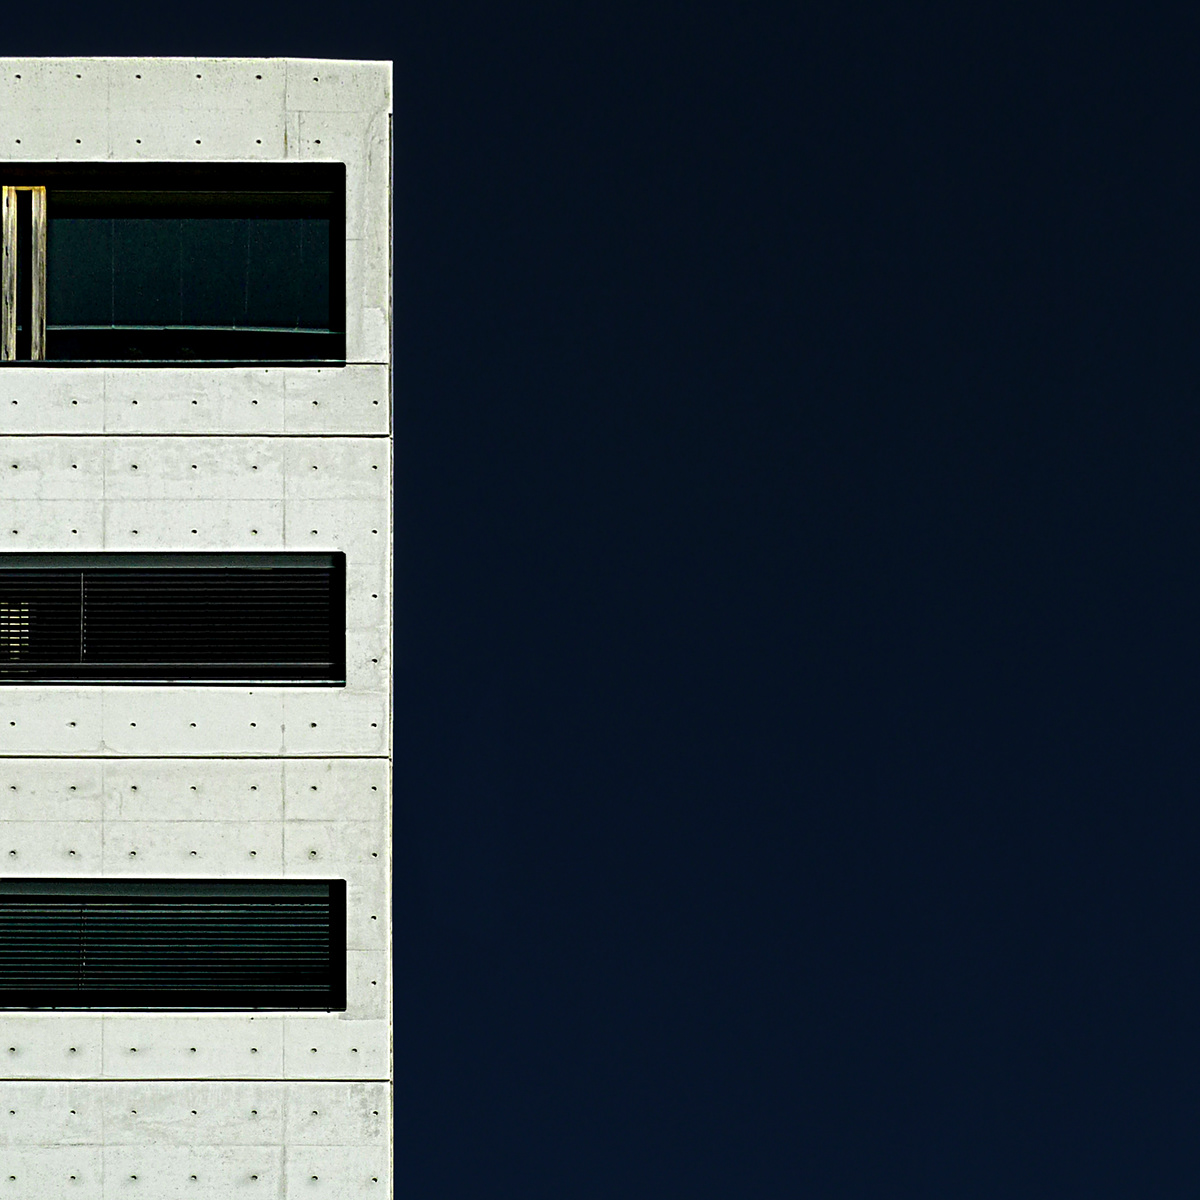 trondheim norway Minimalism modern architecture urbanity minimal concrete architectural photography Scandinavia